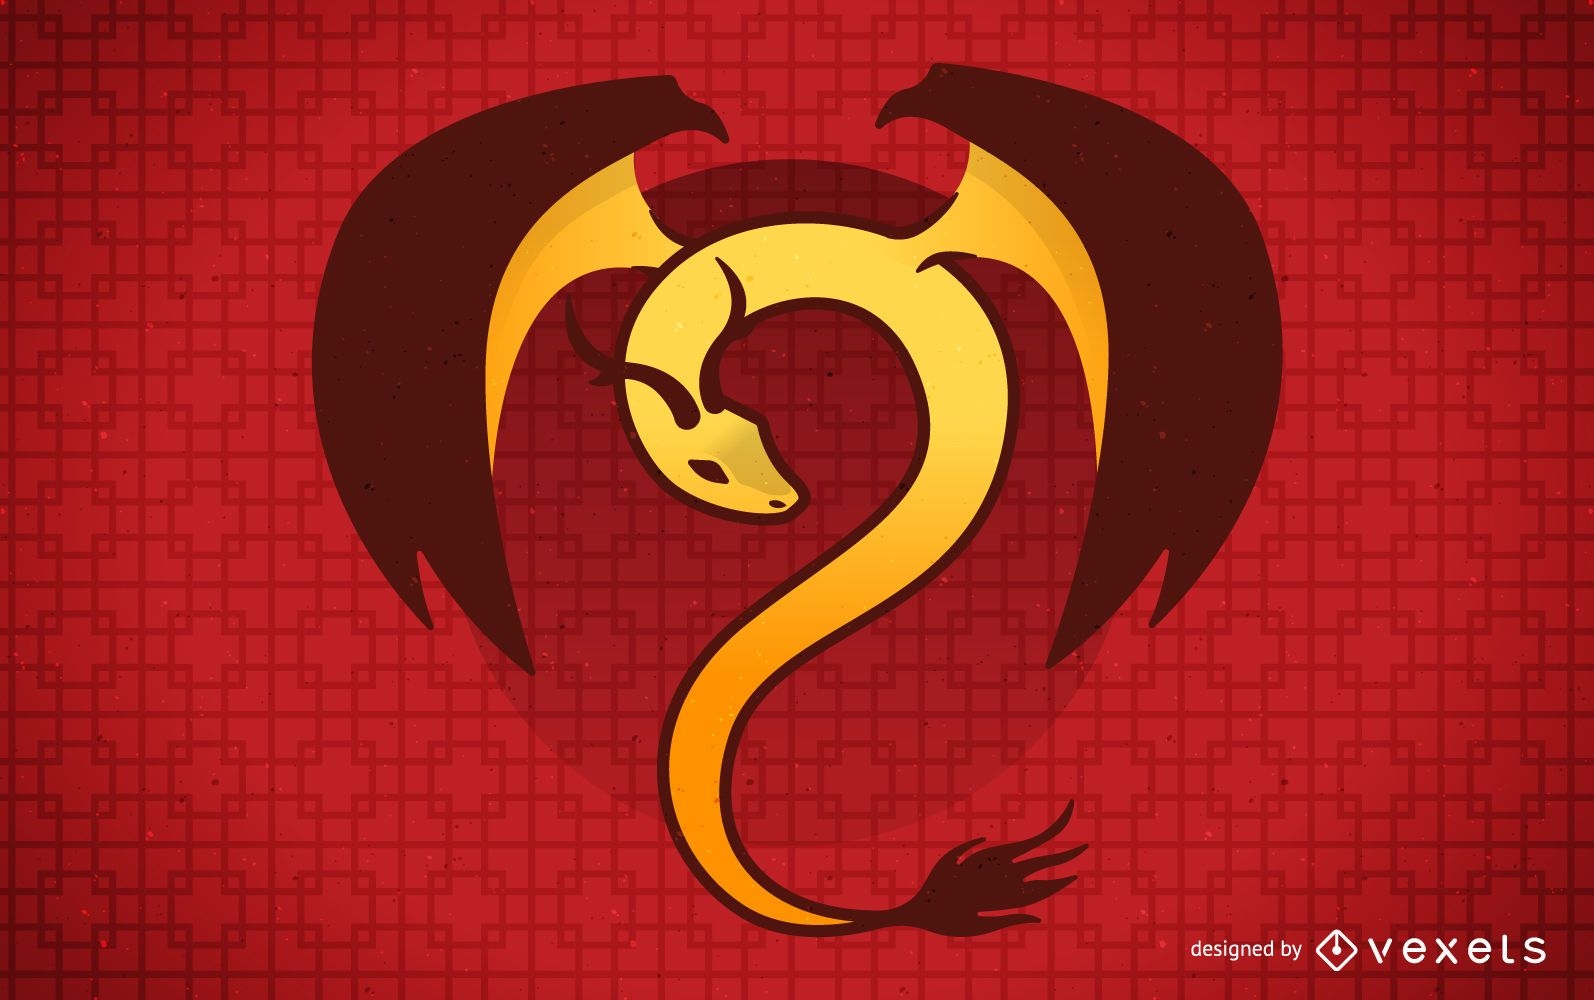 Illustrated dragon design